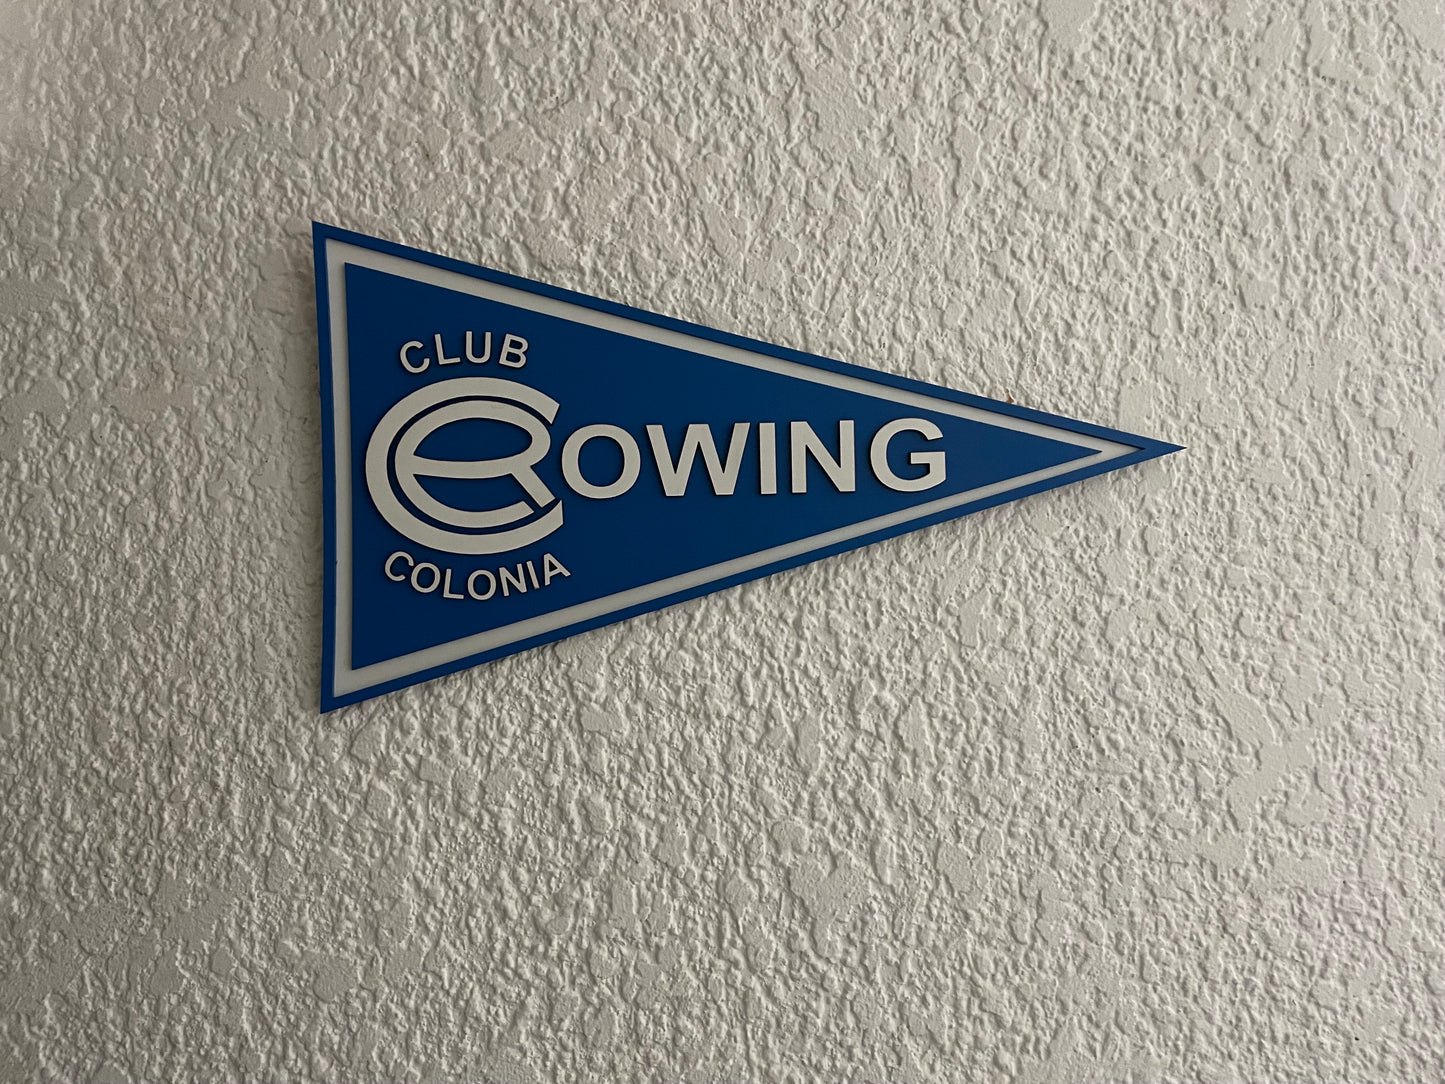 Club Rowing Colonia